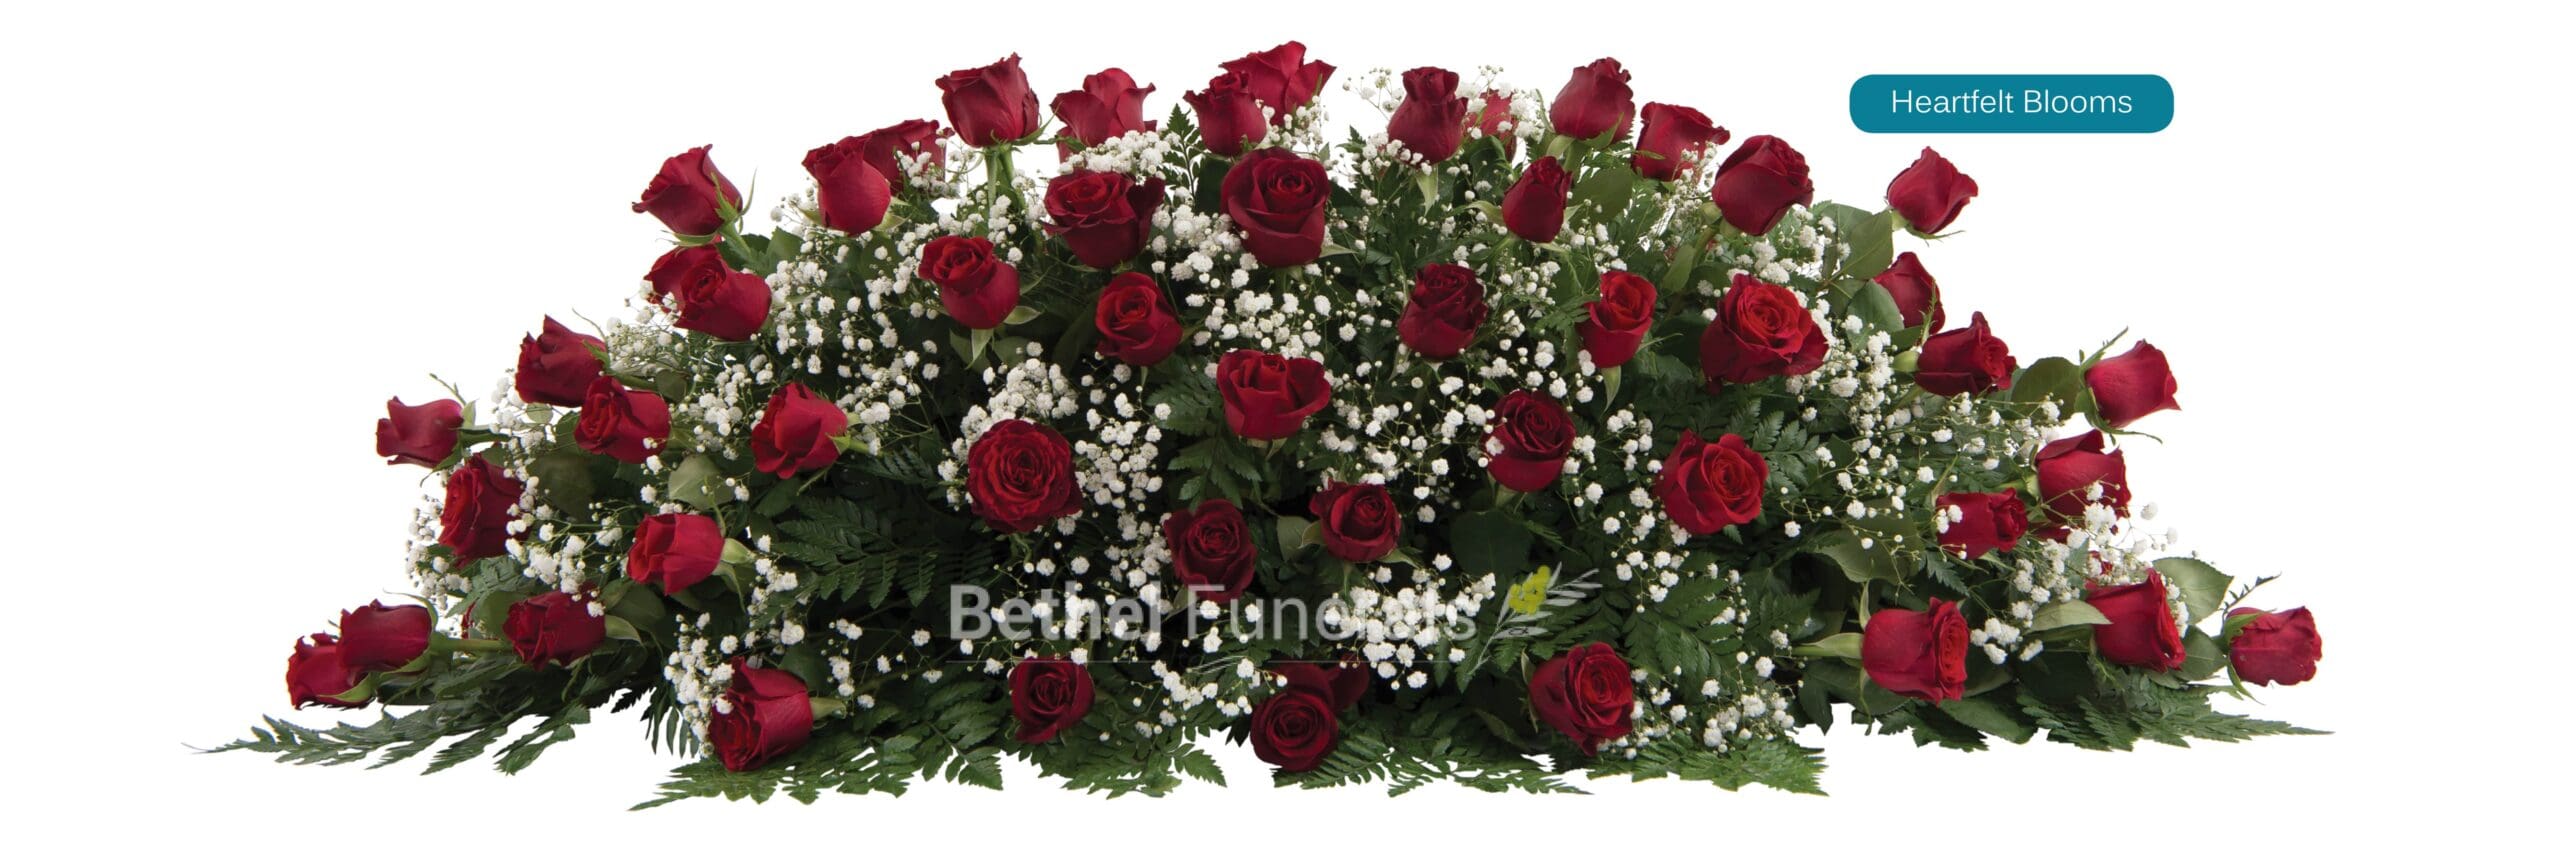 Heartfelt Blooms Funeral flowers